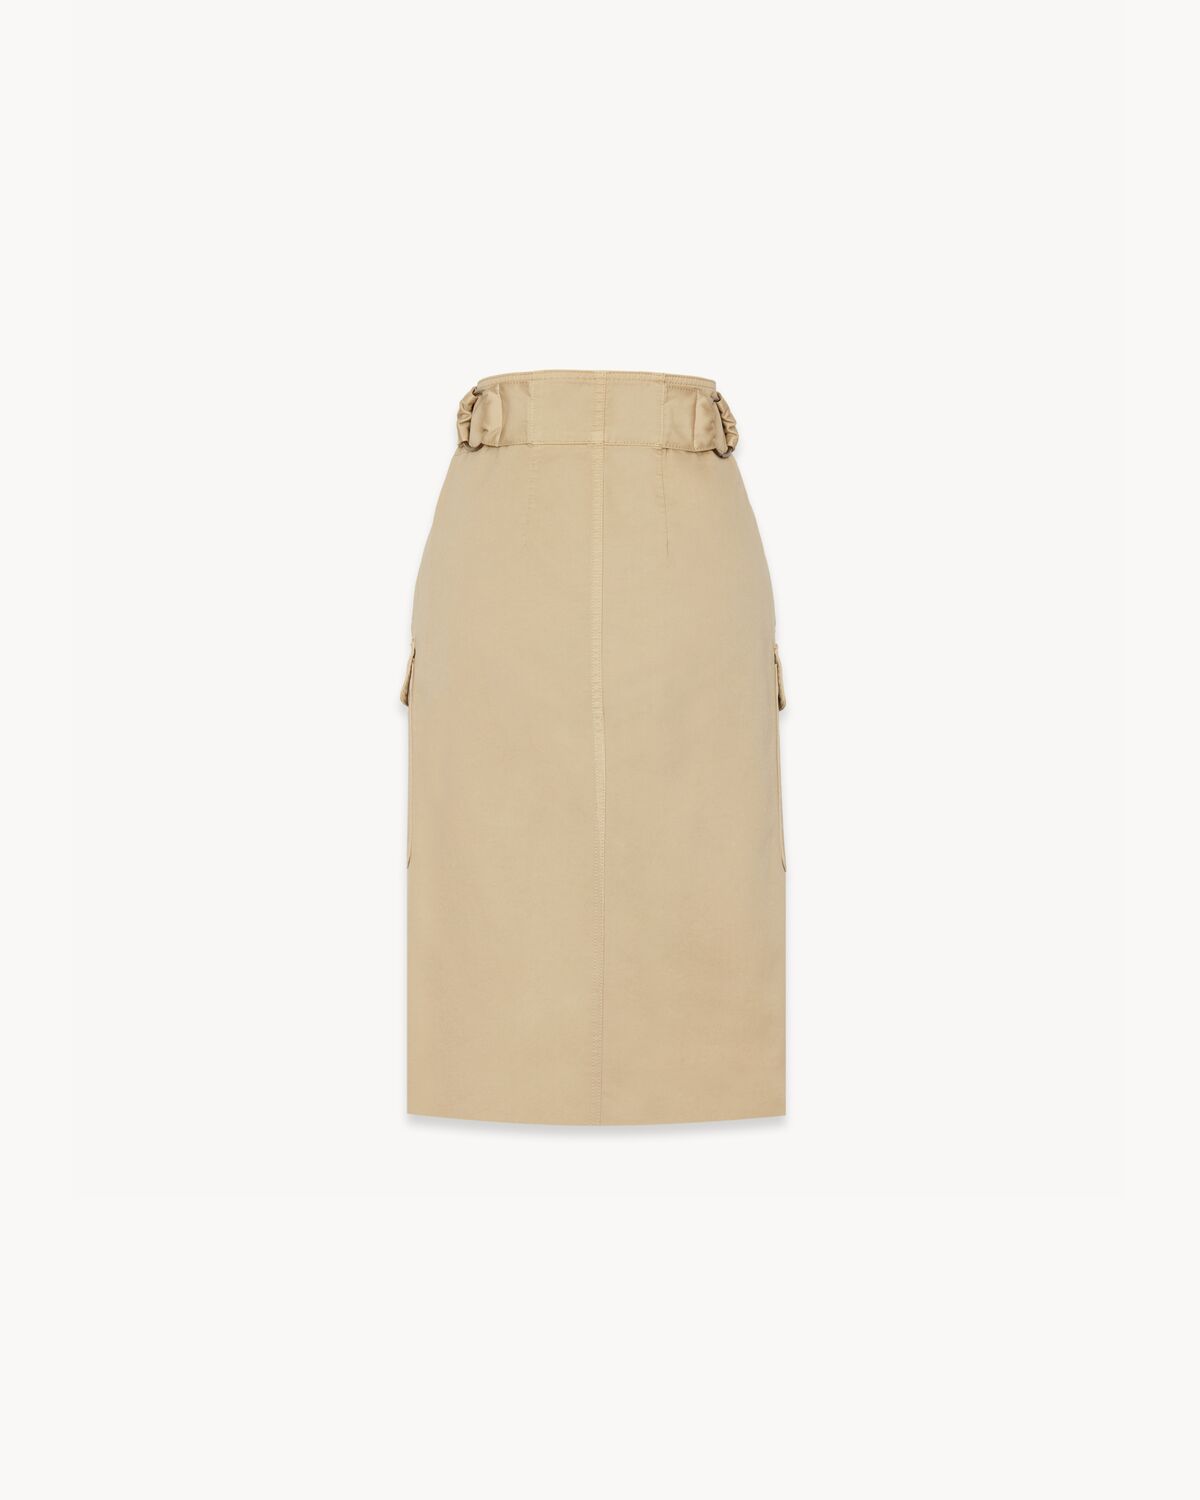 SAHARIENNE skirt in cotton